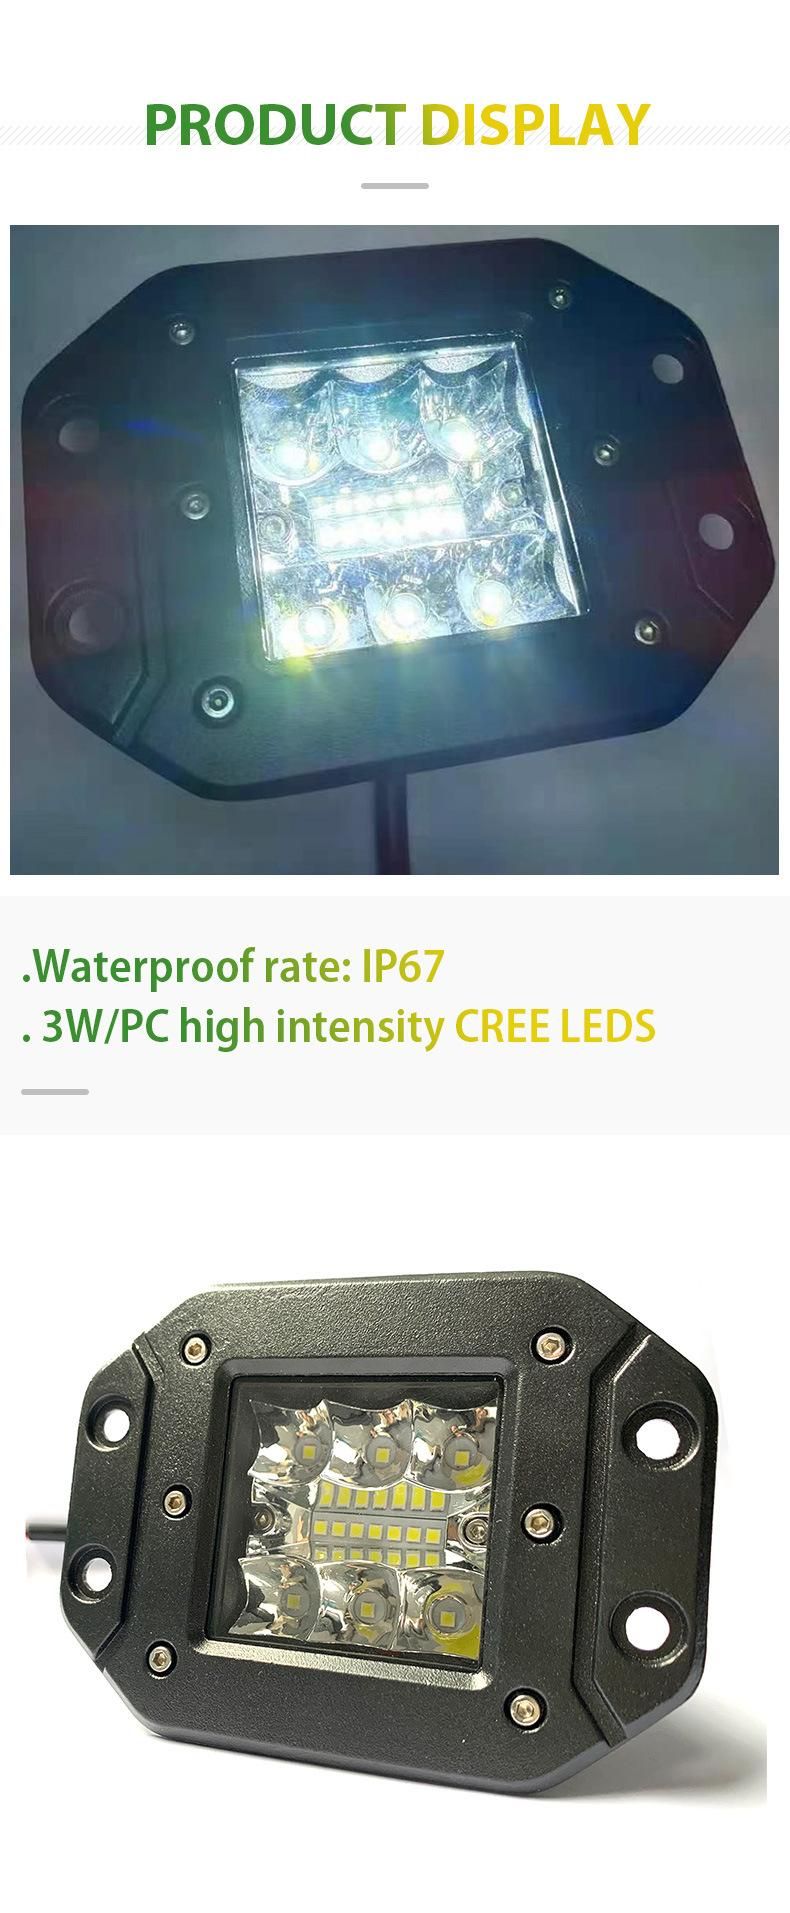 Wholesales Waterproof Lighting System 39W Auto LED Work Light Bar